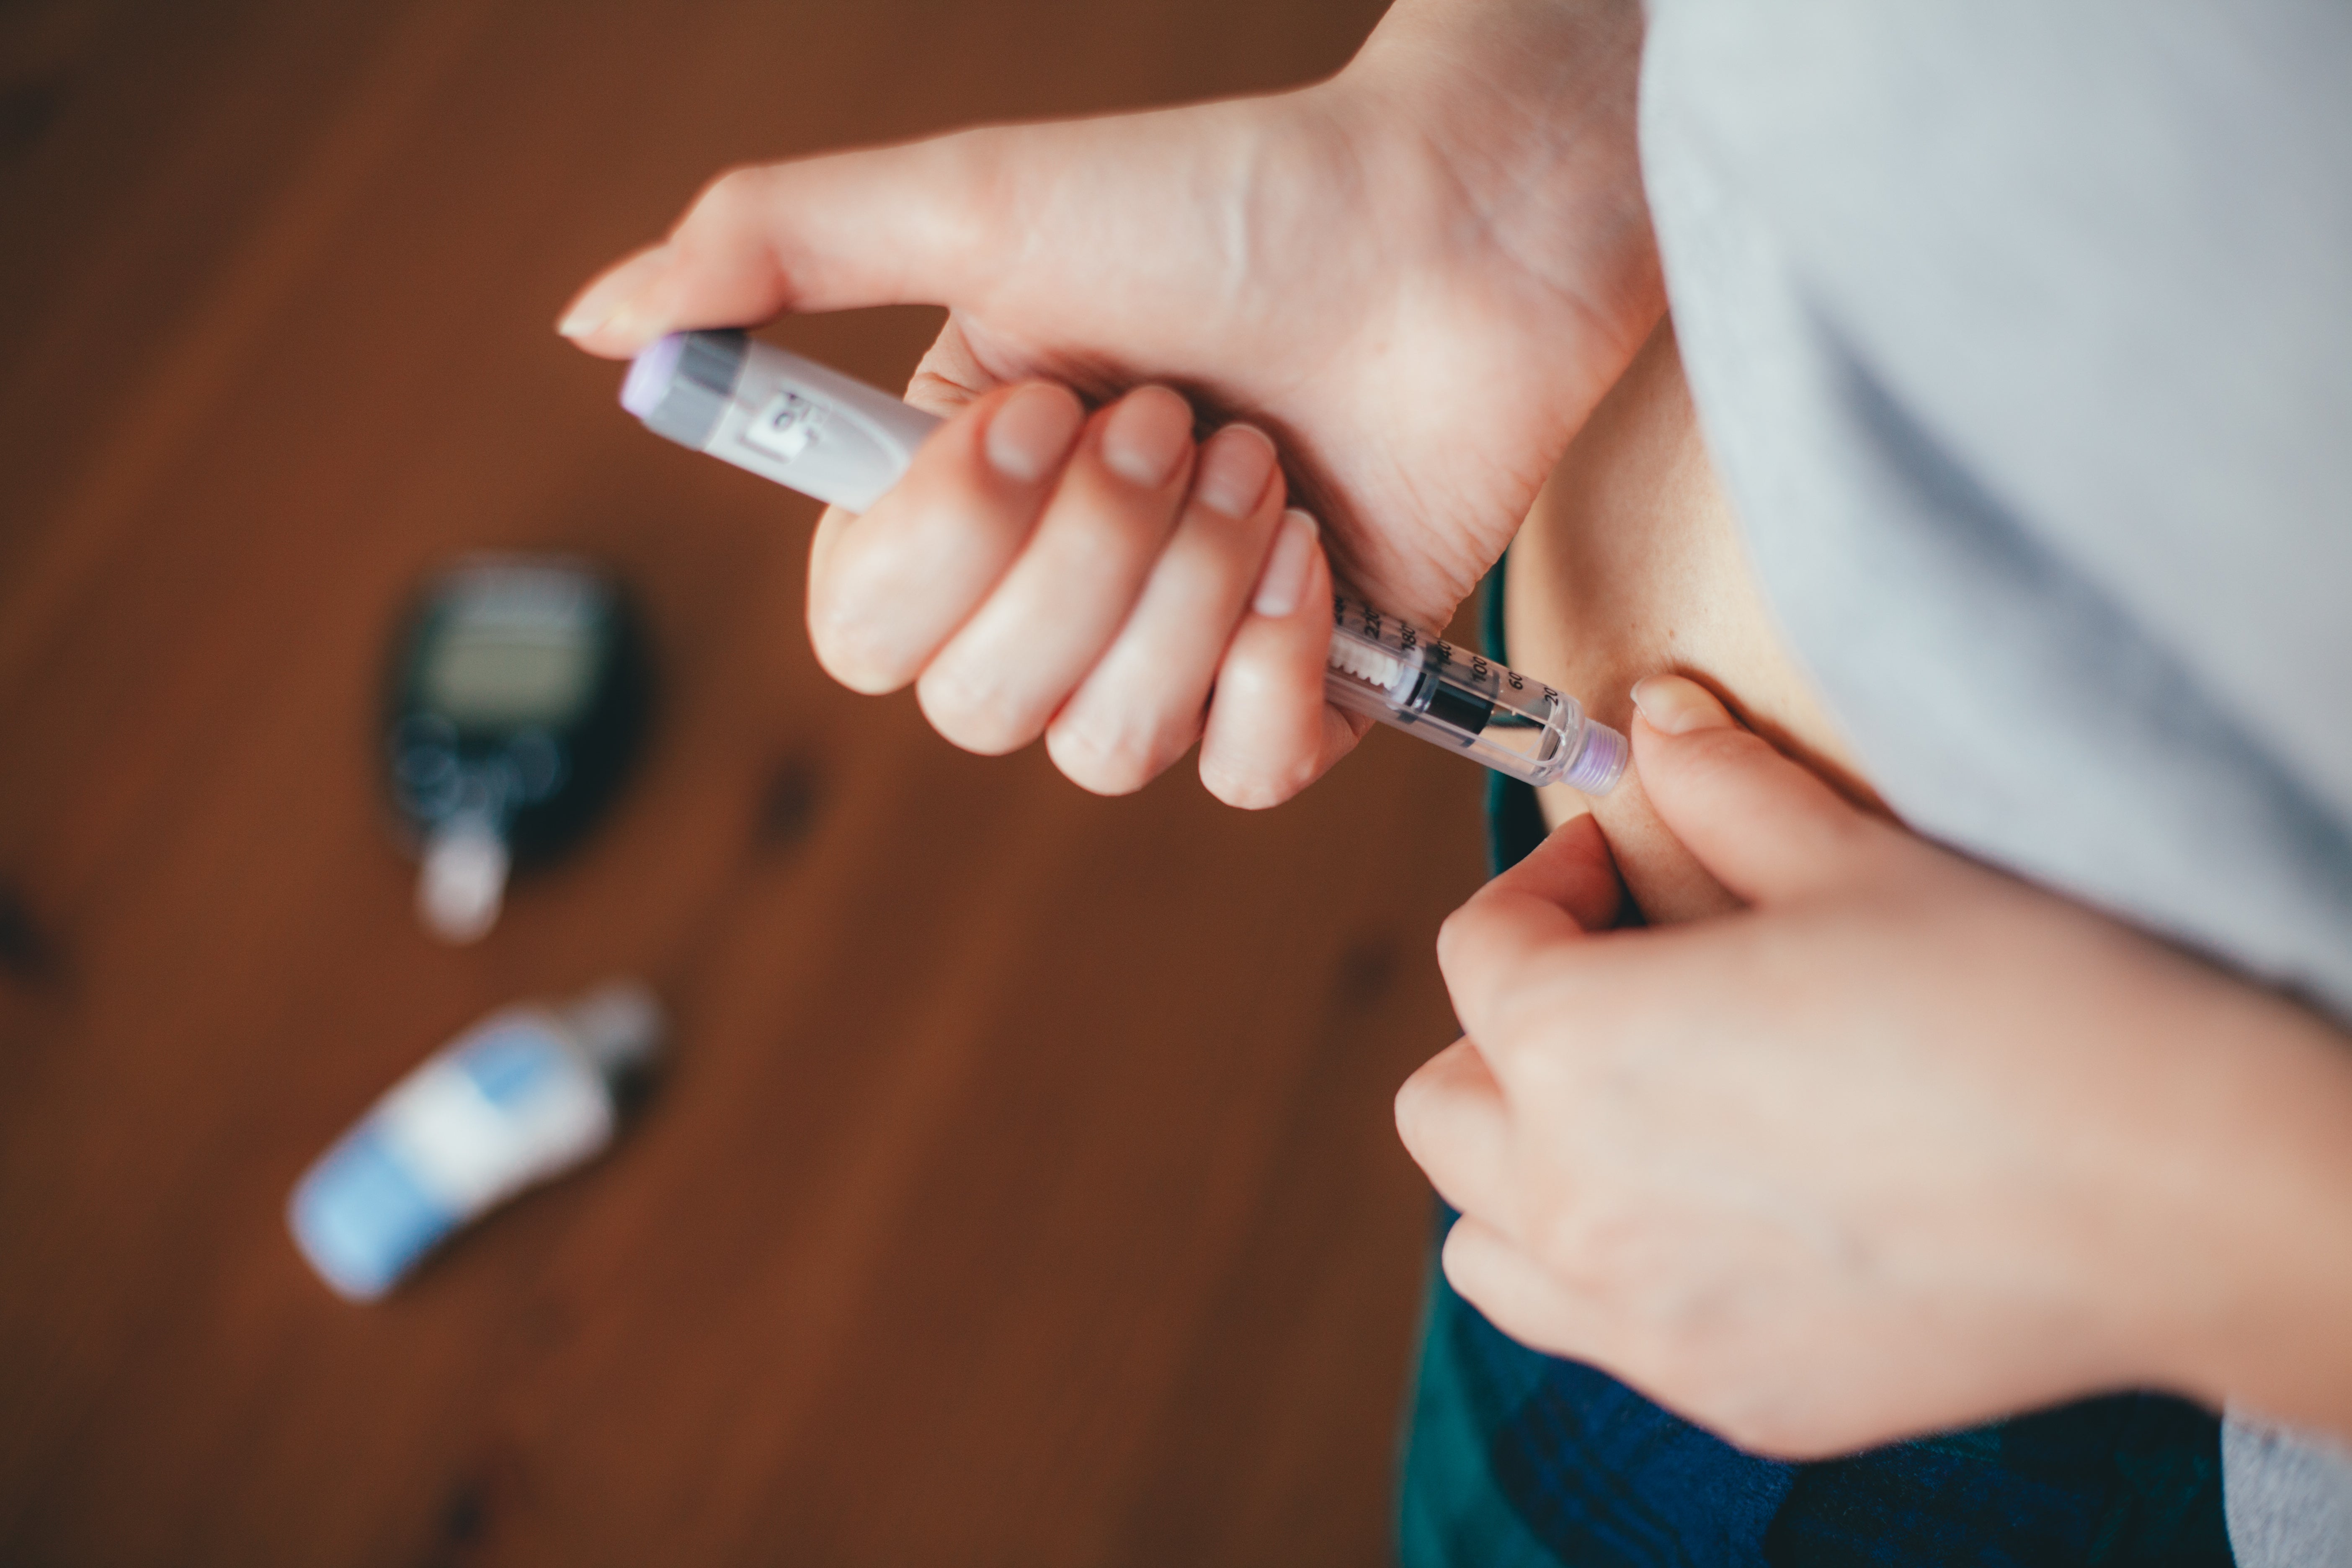 Type 1 diabetes is an autoimmune disorder requiring insulin